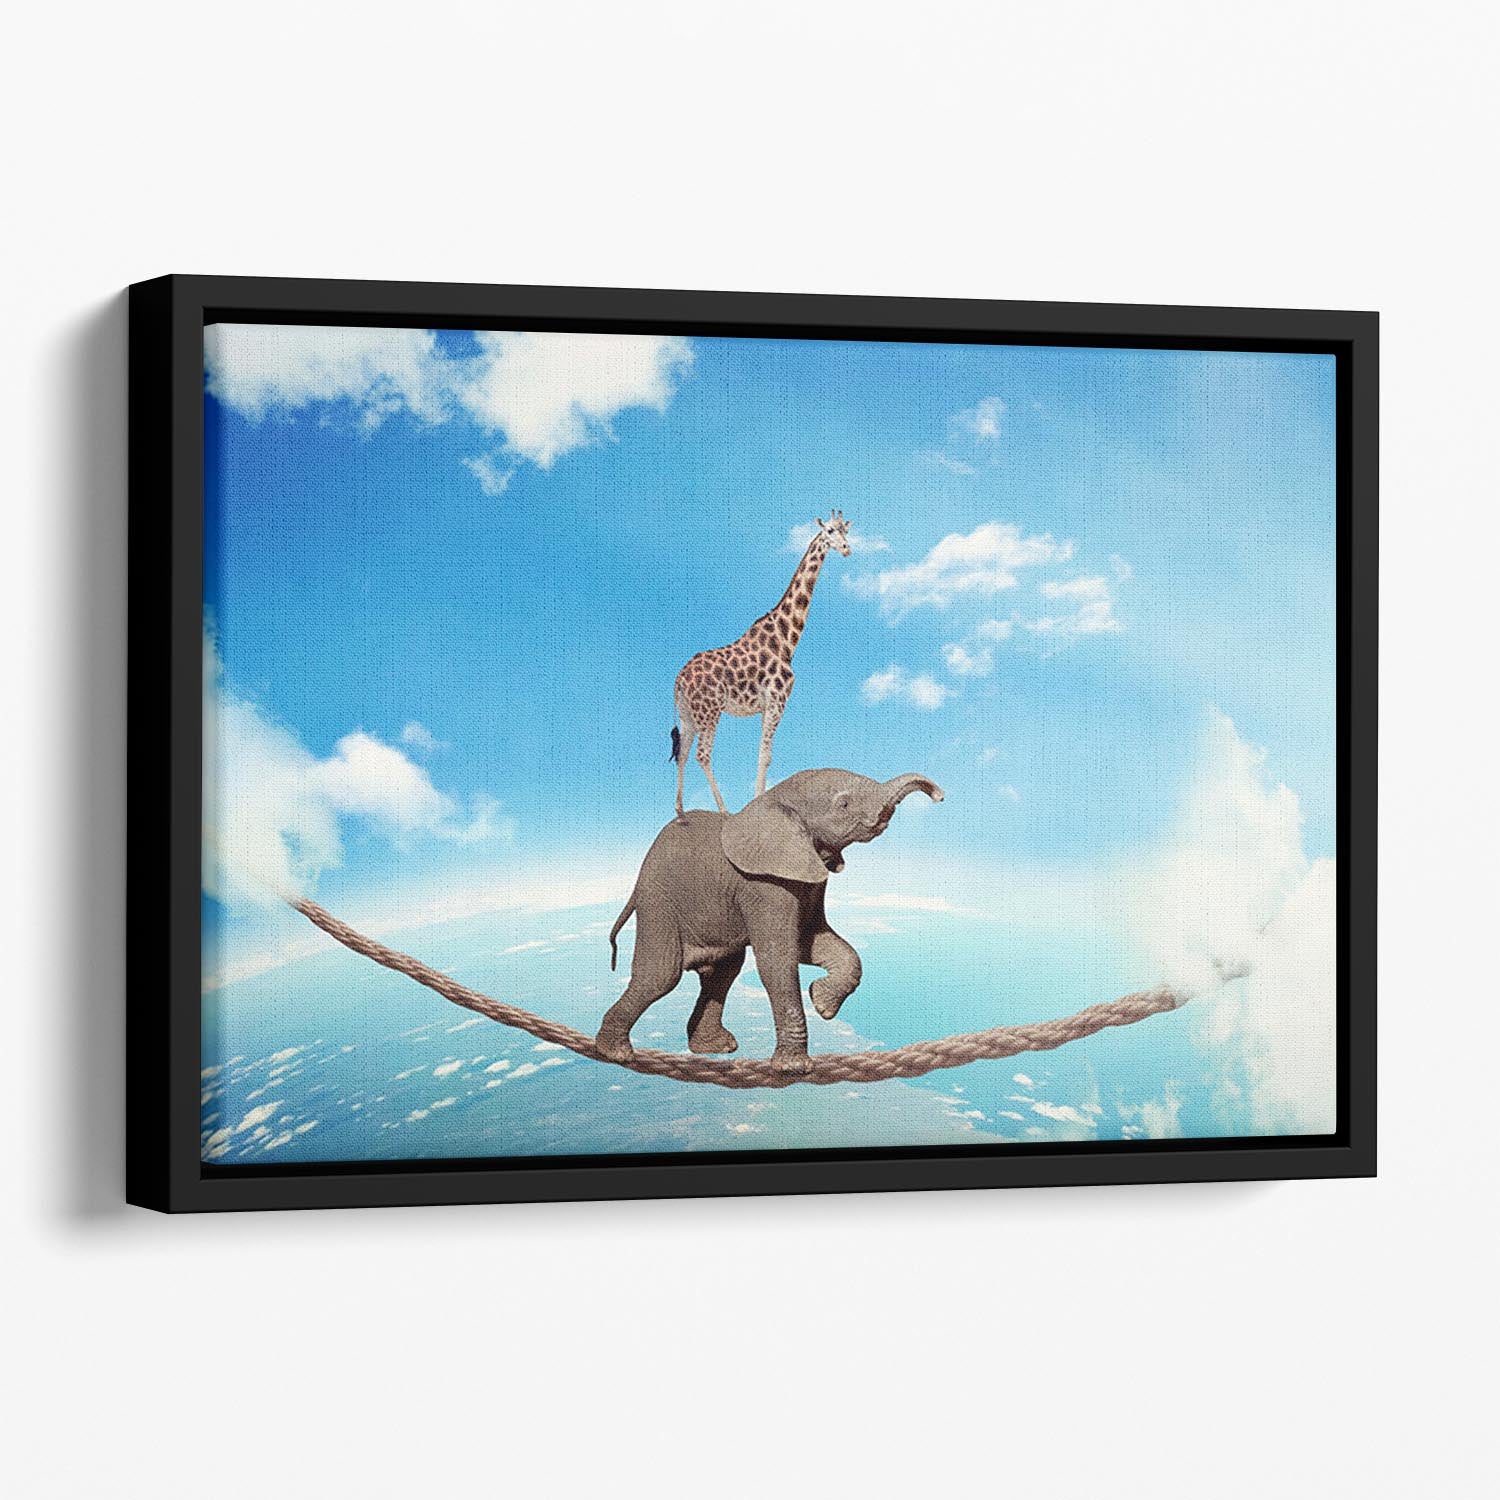 Elephant with giraffe walking on dangerous rope high in sky Floating Framed Canvas - Canvas Art Rocks - 1